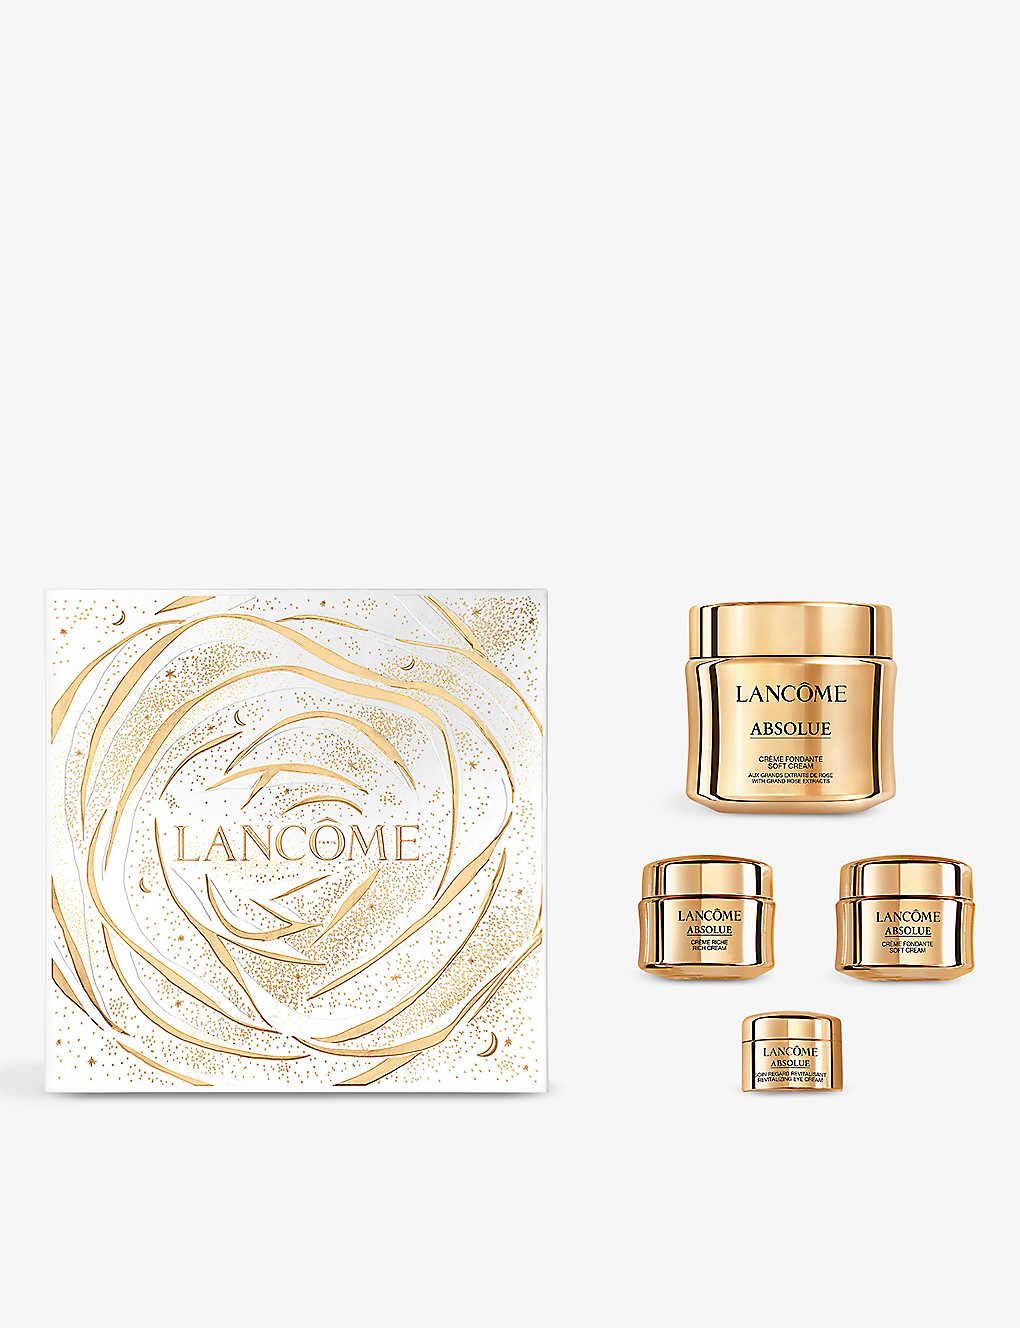 Lancôme Lancome Absolue Cream Collection Gift Set